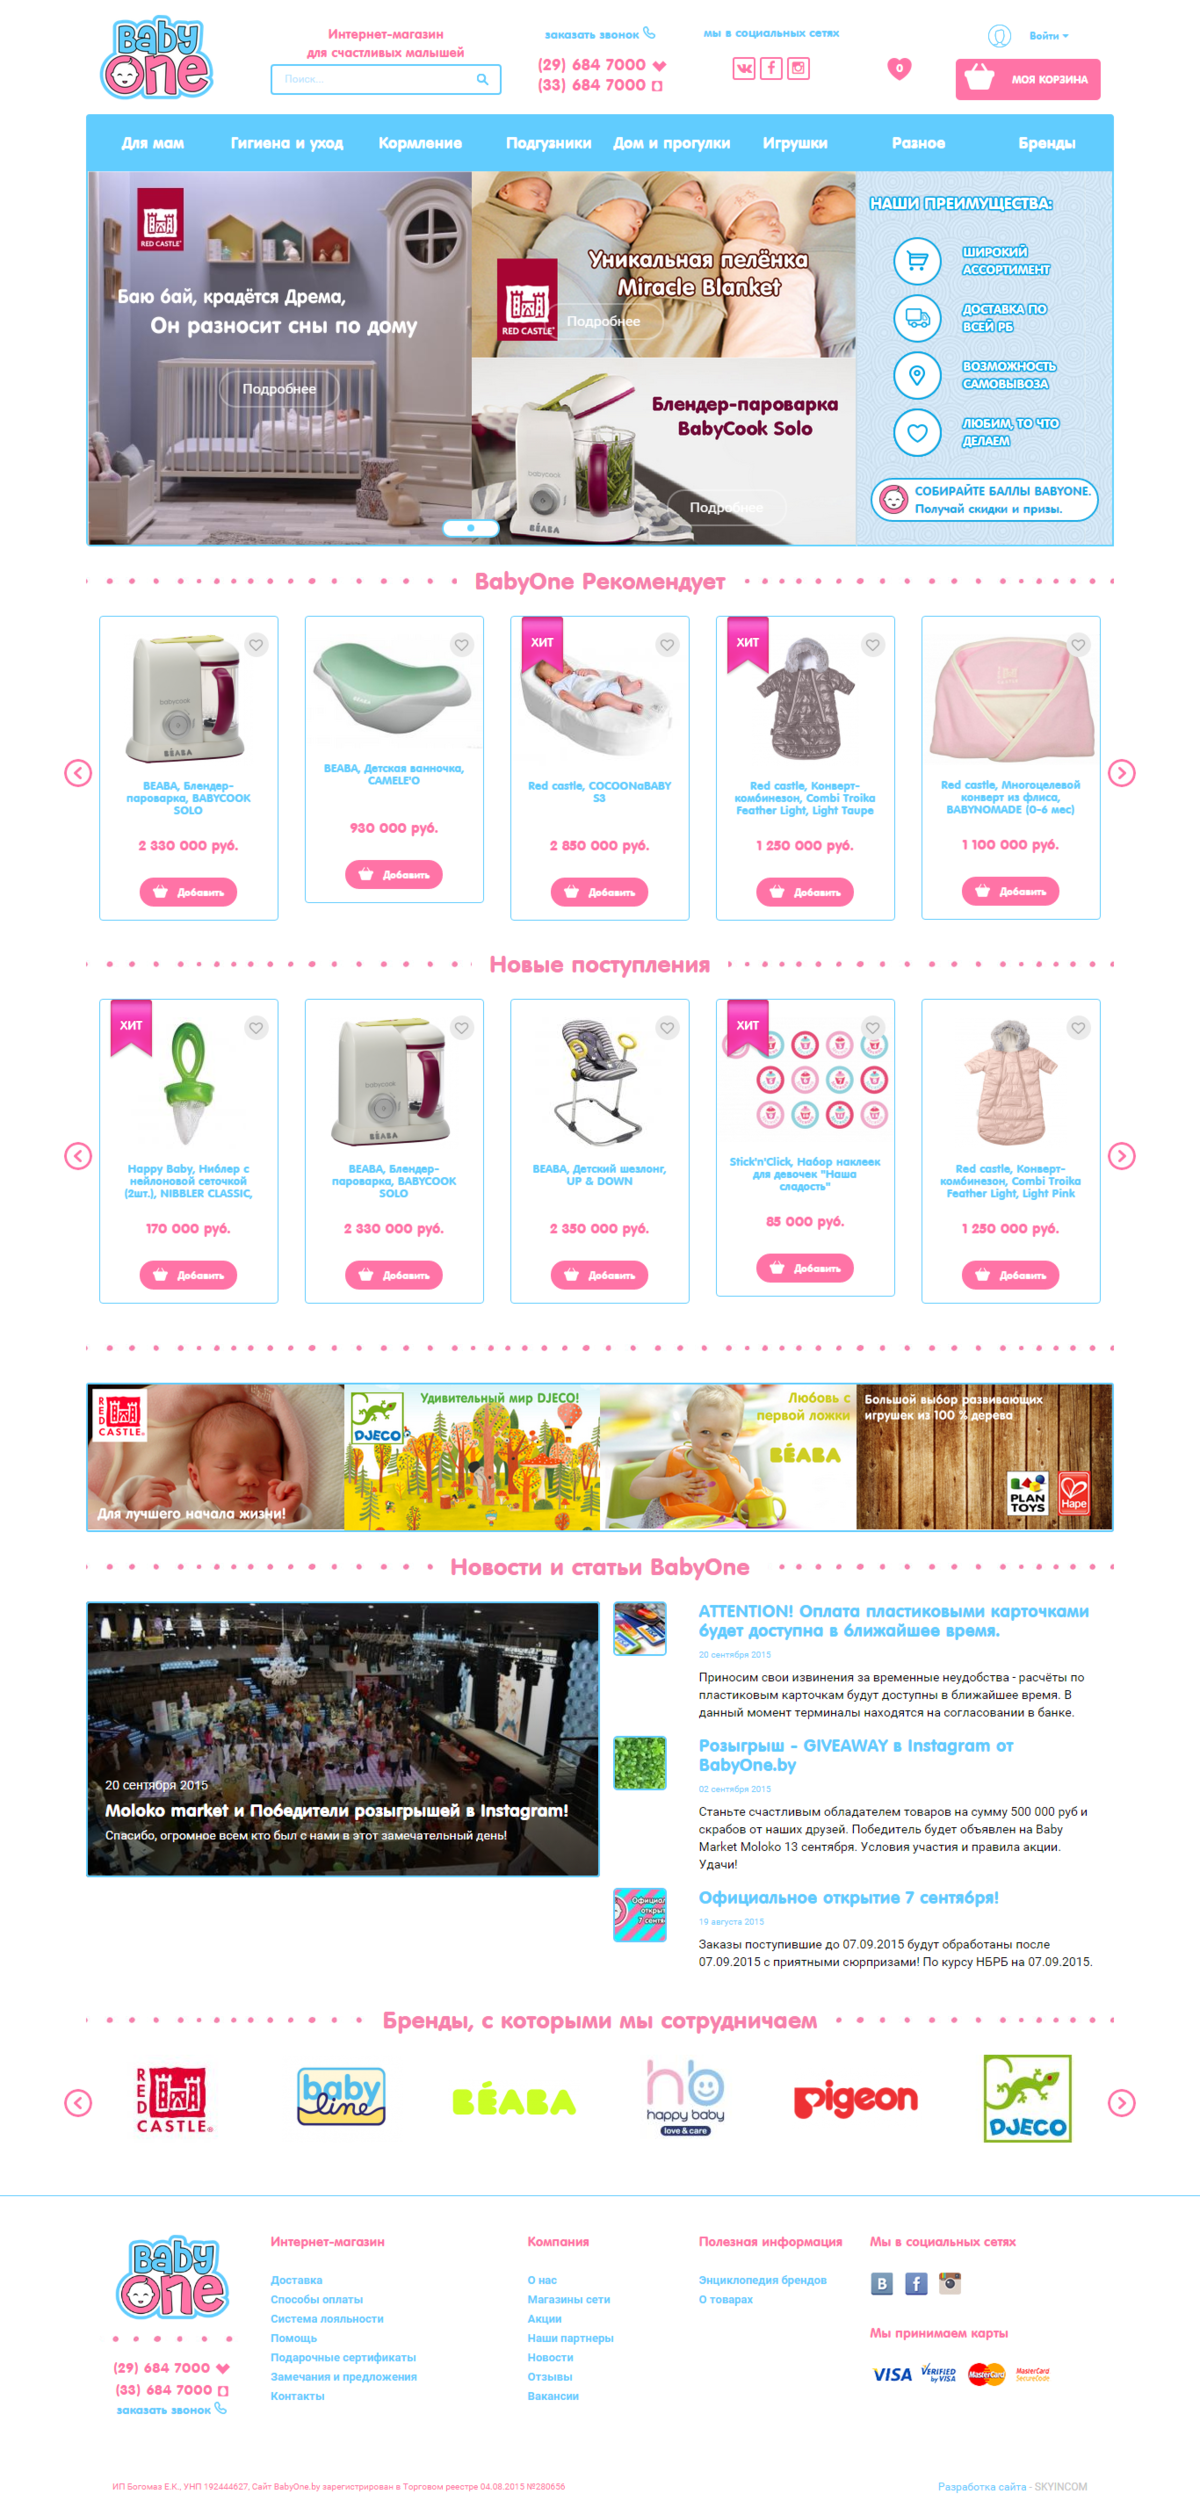 BabyOne online store